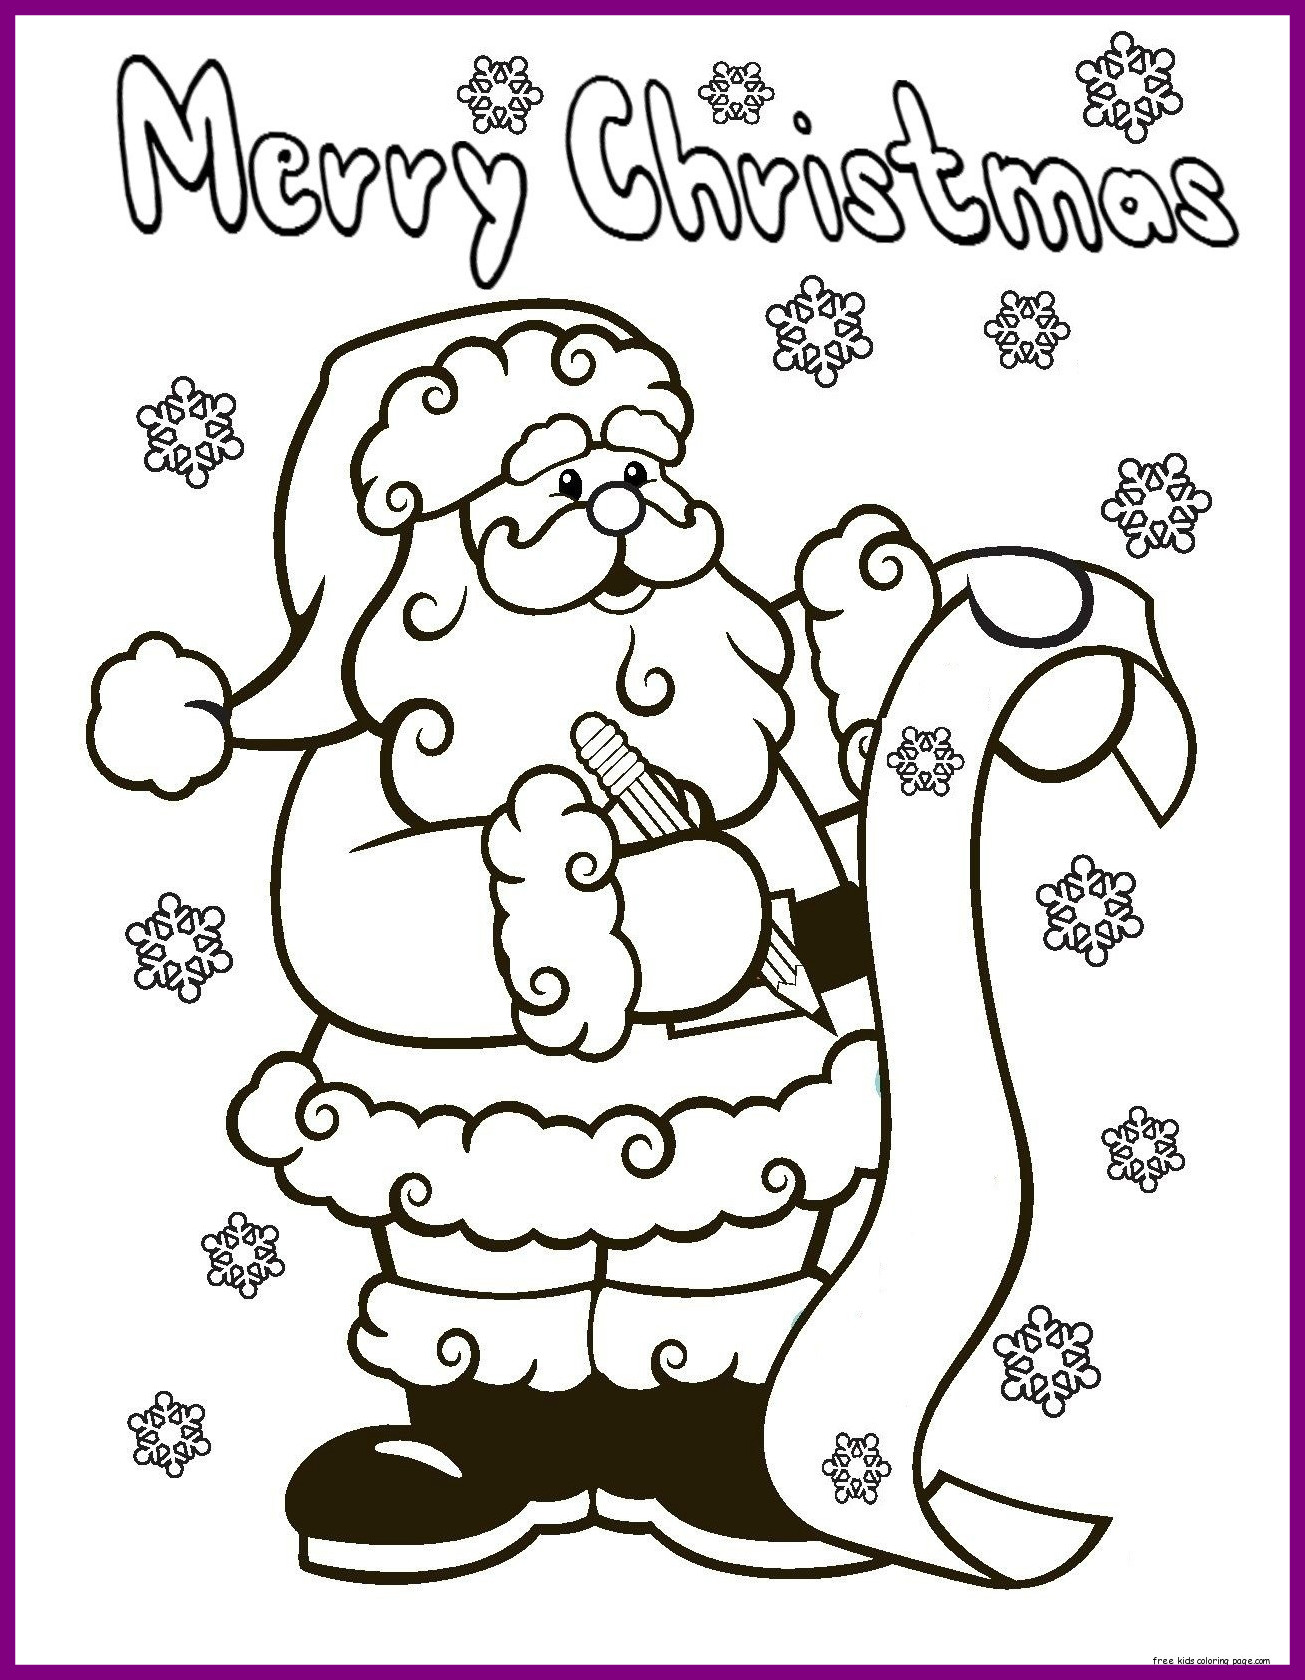 Santa Sleigh Coloring Page at GetColorings.com | Free ...